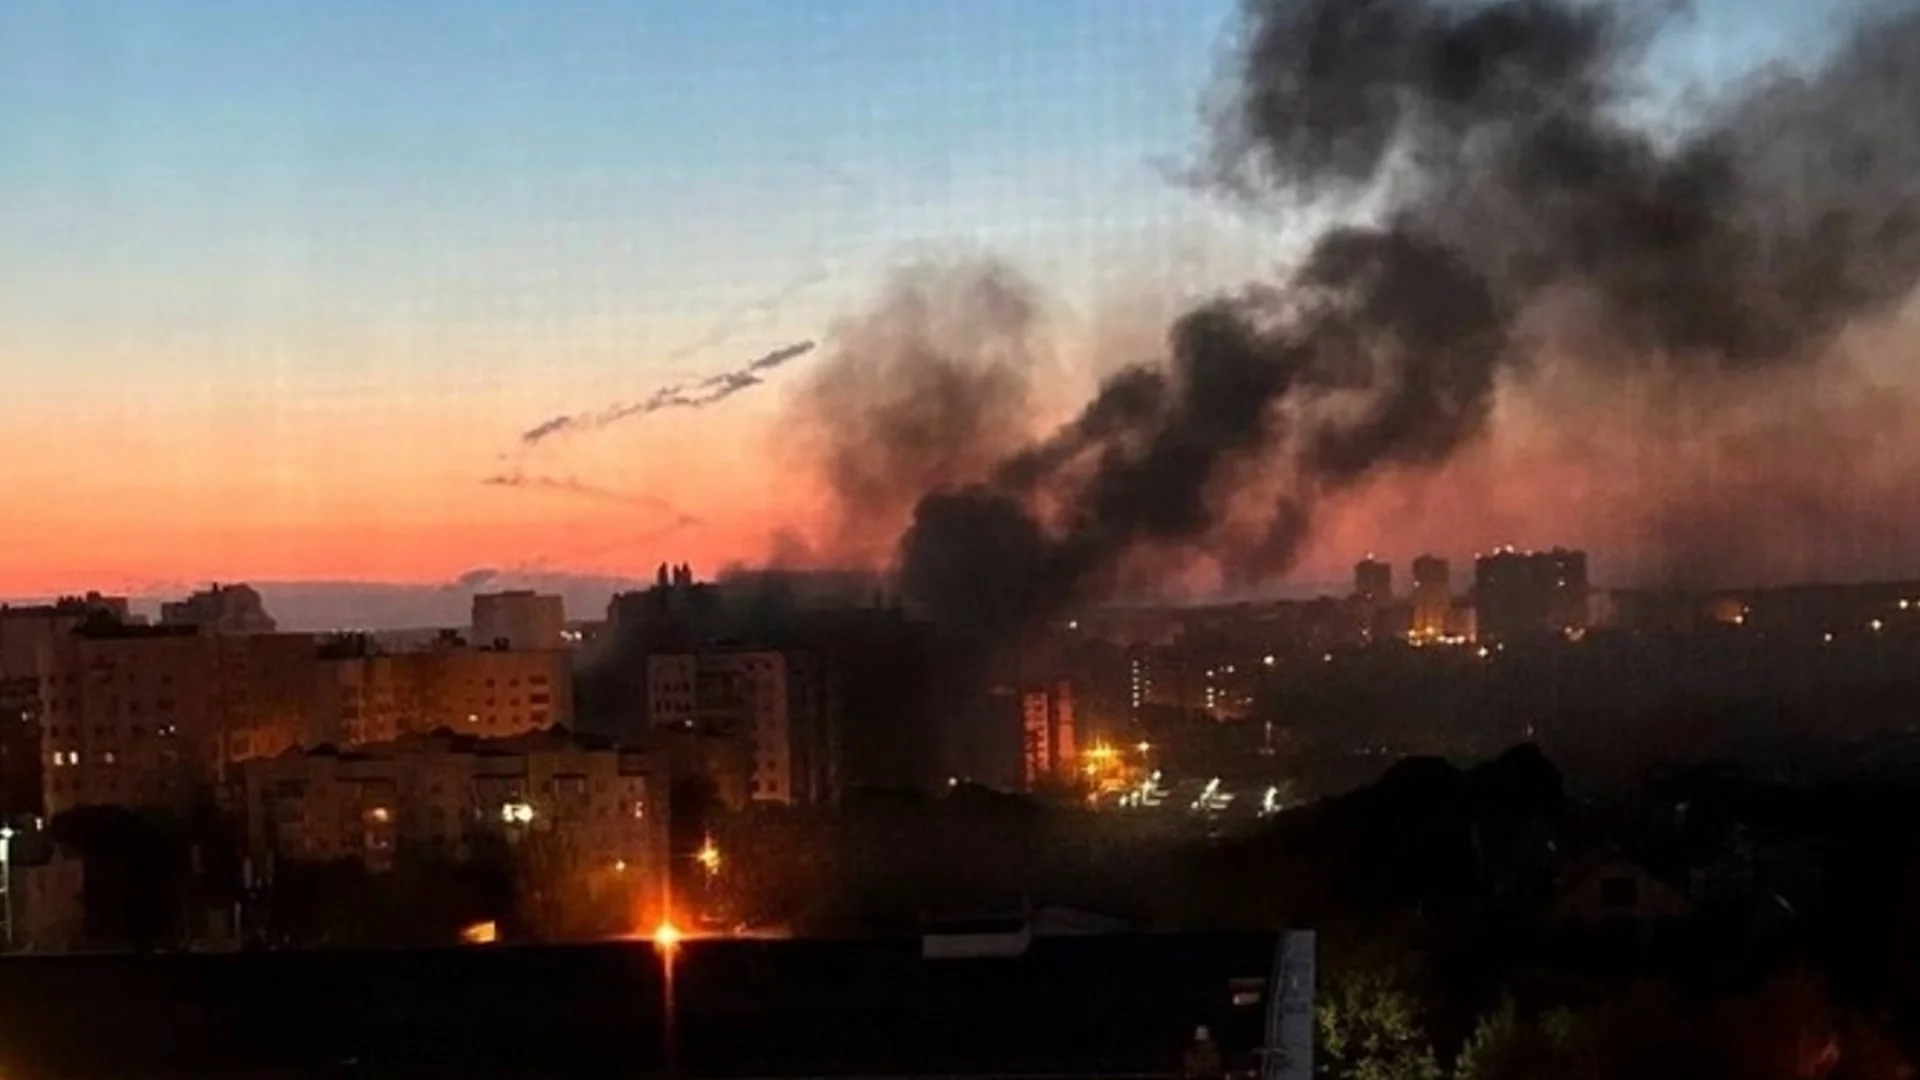 Пожар в Белгород: Украйна подпали склад за боеприпаси? (ВИДЕО)